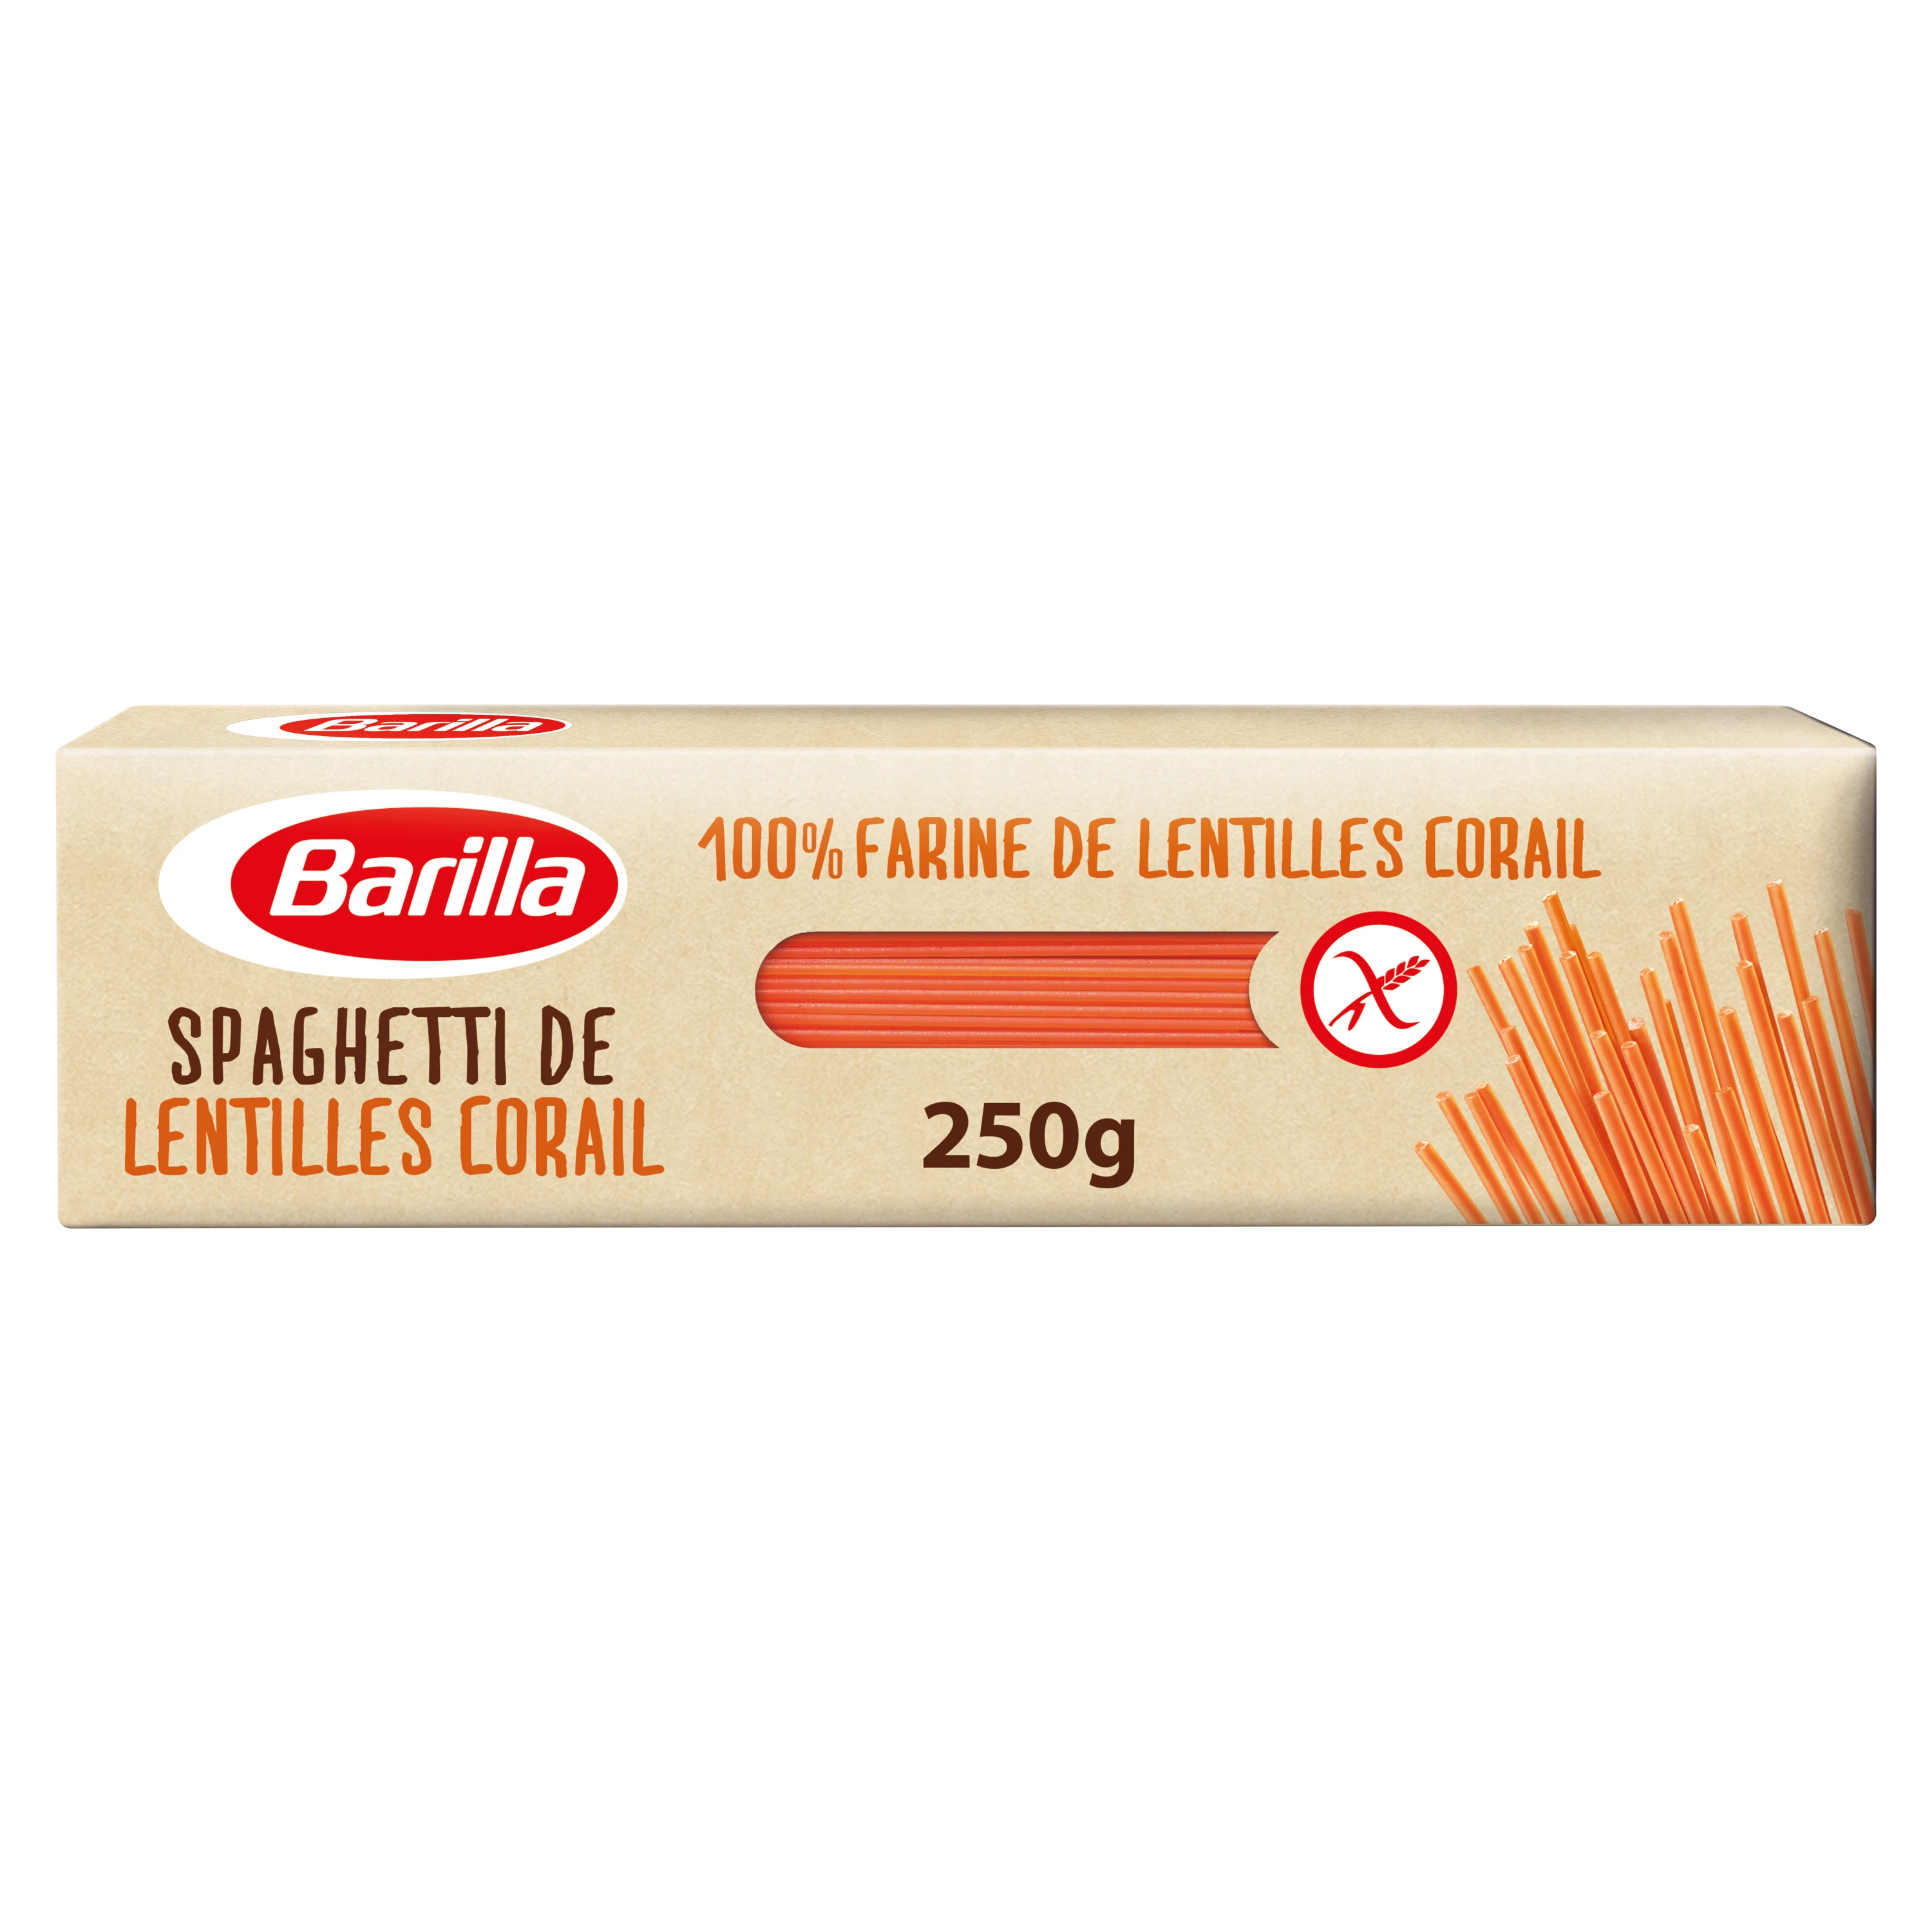 Spaghetti Lenticchie.corail 250g